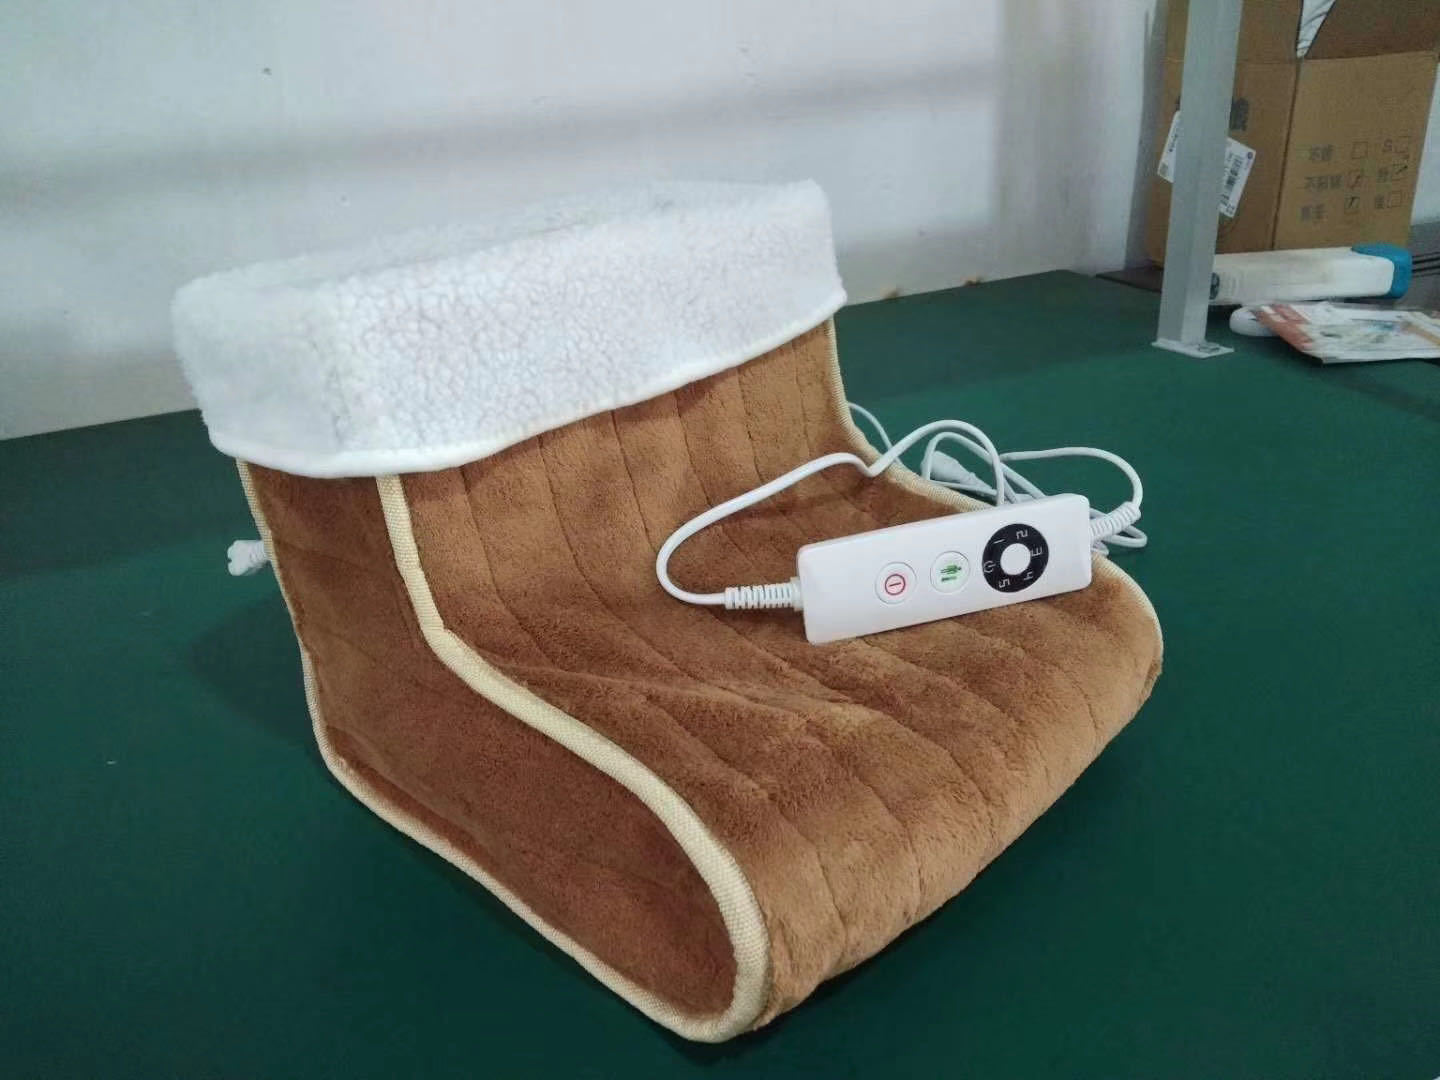 Plug-in electric heating pad warming feet Bao Gaobangbang electric heating shoes office bedroom heating pads